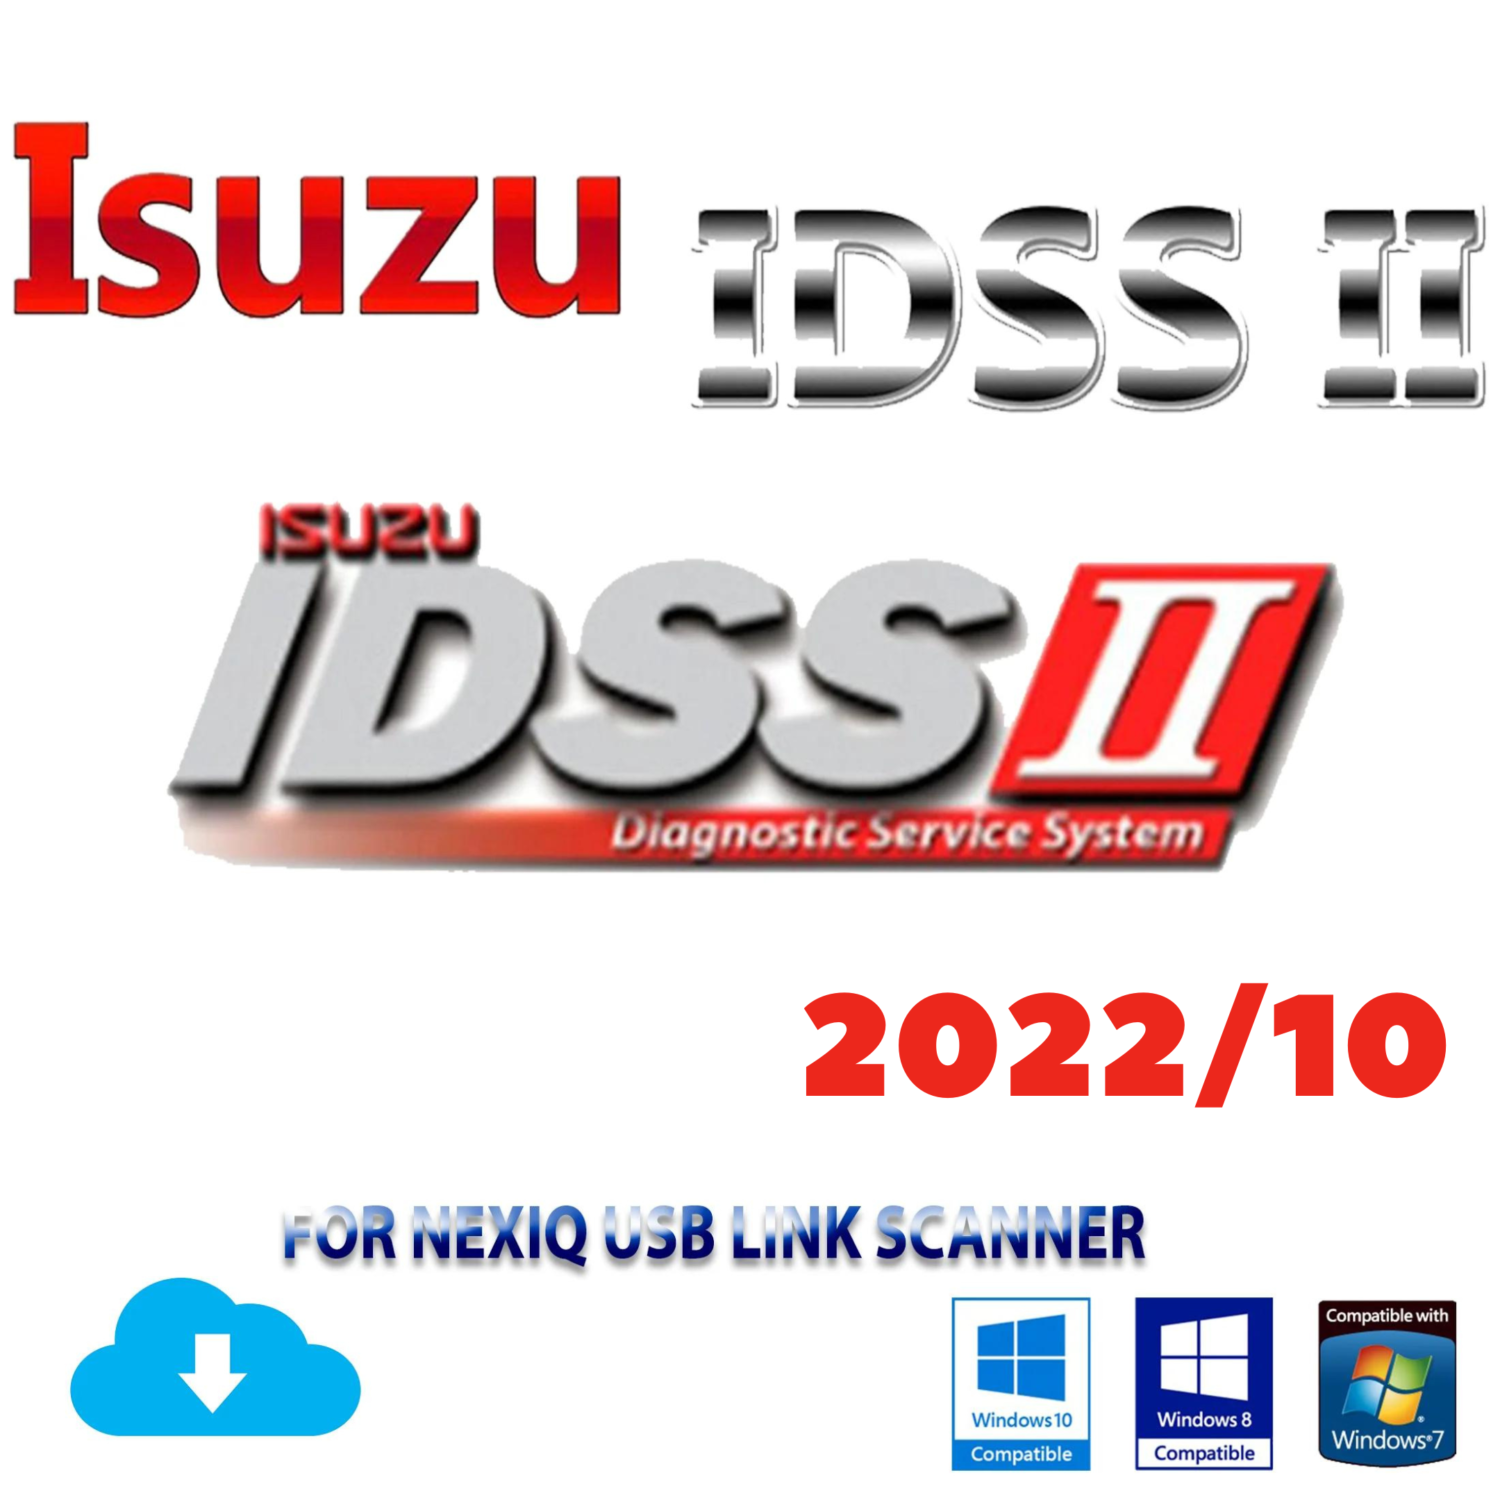 Sistema de servicio de diagnóstico ISUZU US IDSS II 2022/12 para Nexiq USB Link